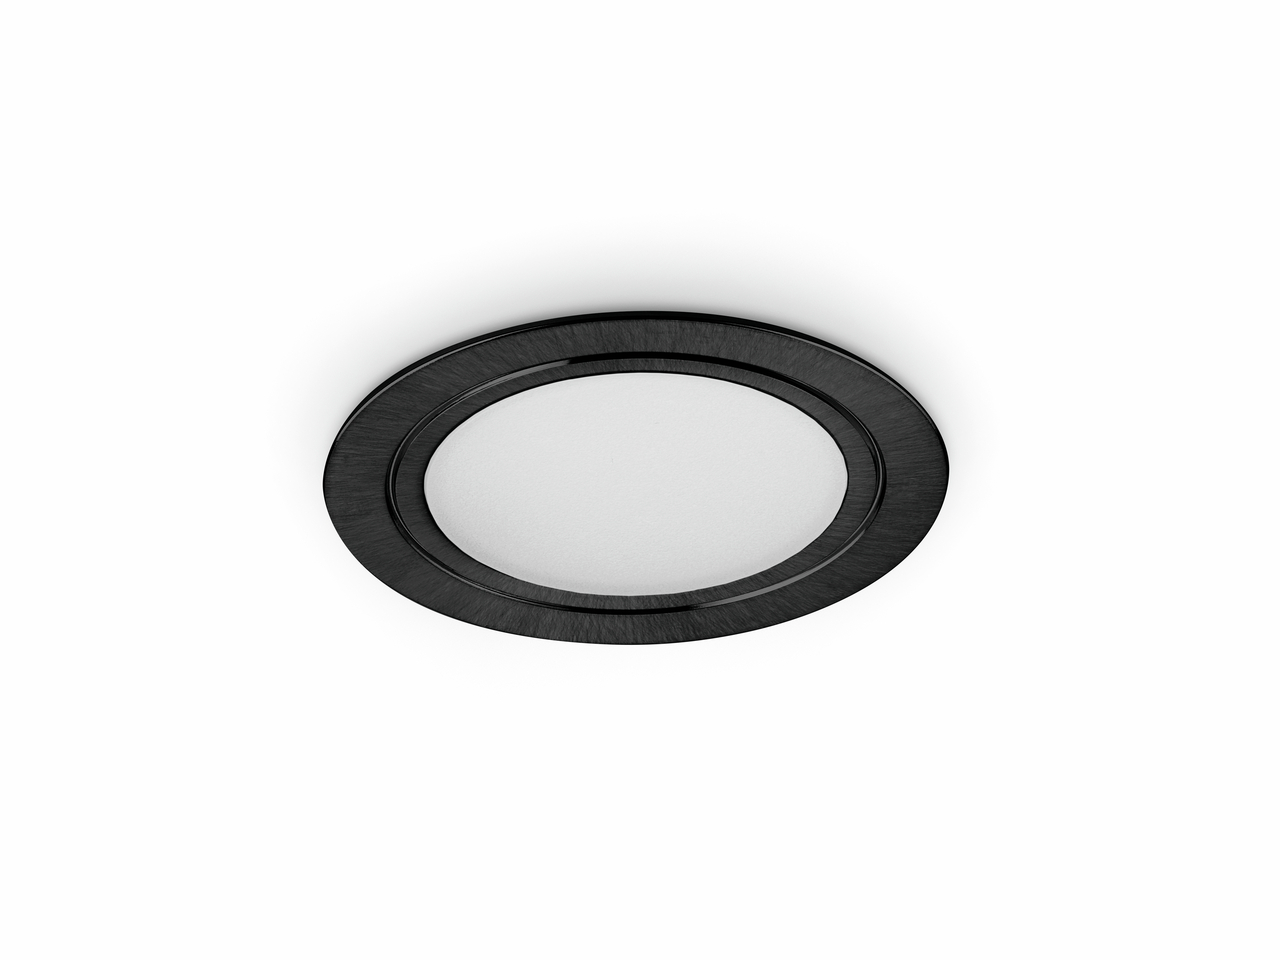 Anelli LED black matt, single lamp without switch, 4000 K neutral white